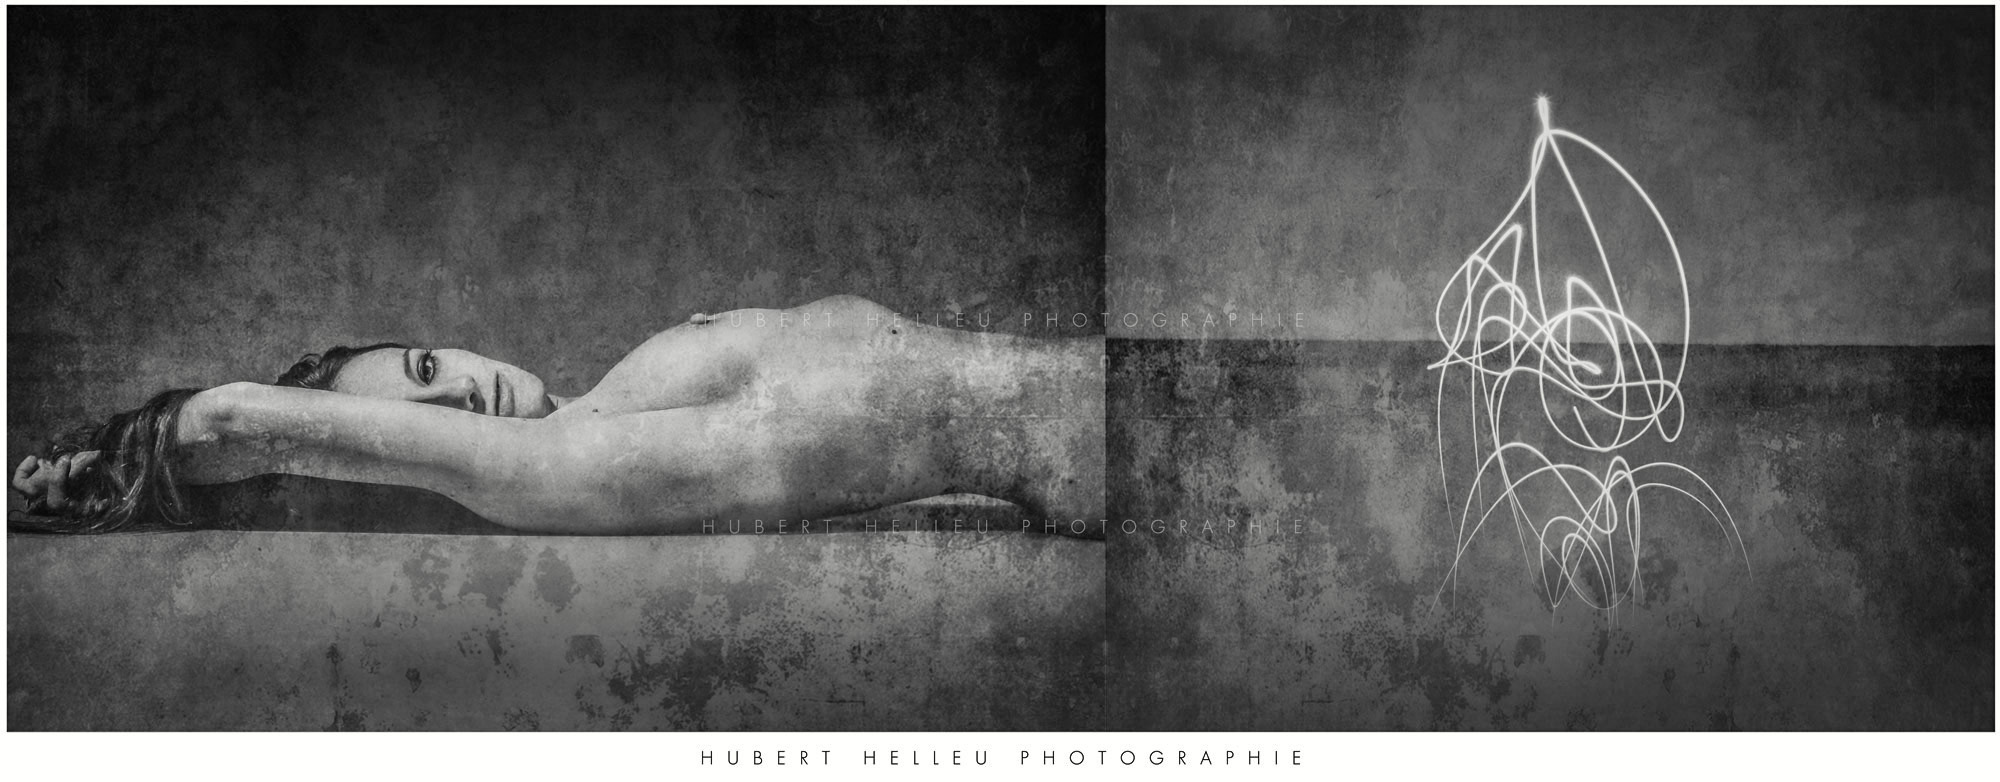 Hubert Helleu photographe